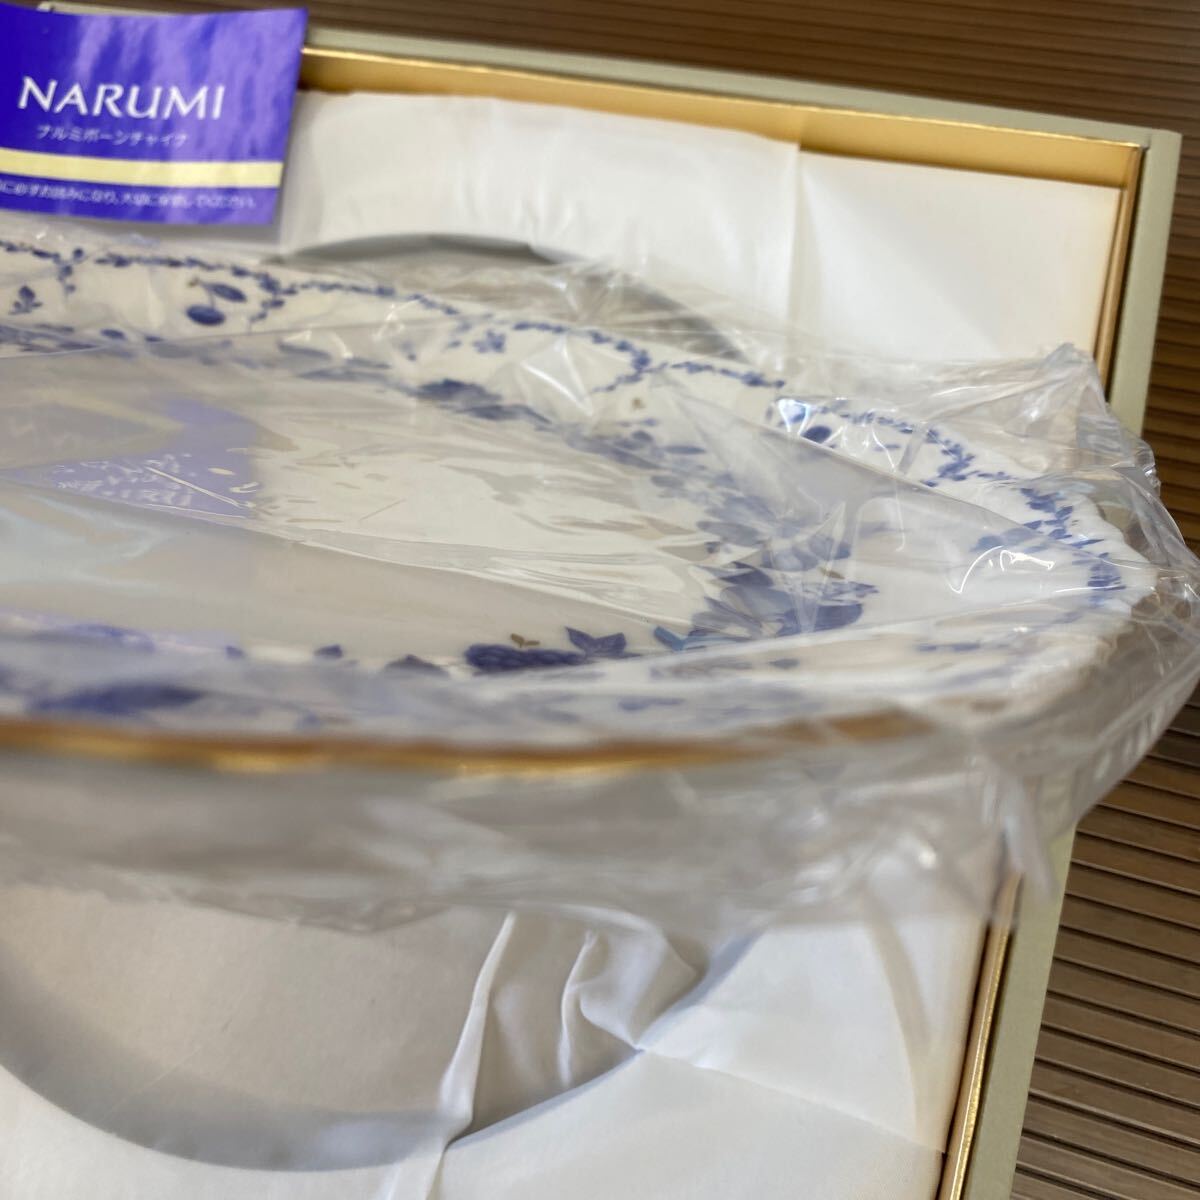 NARUMI ナルミ ボーンチャイナ ミラノ シリーズ プレート 大皿 アラカルトプレート 果物柄 洋食器 ブランド 27㎝ 未使用 洋皿_画像4